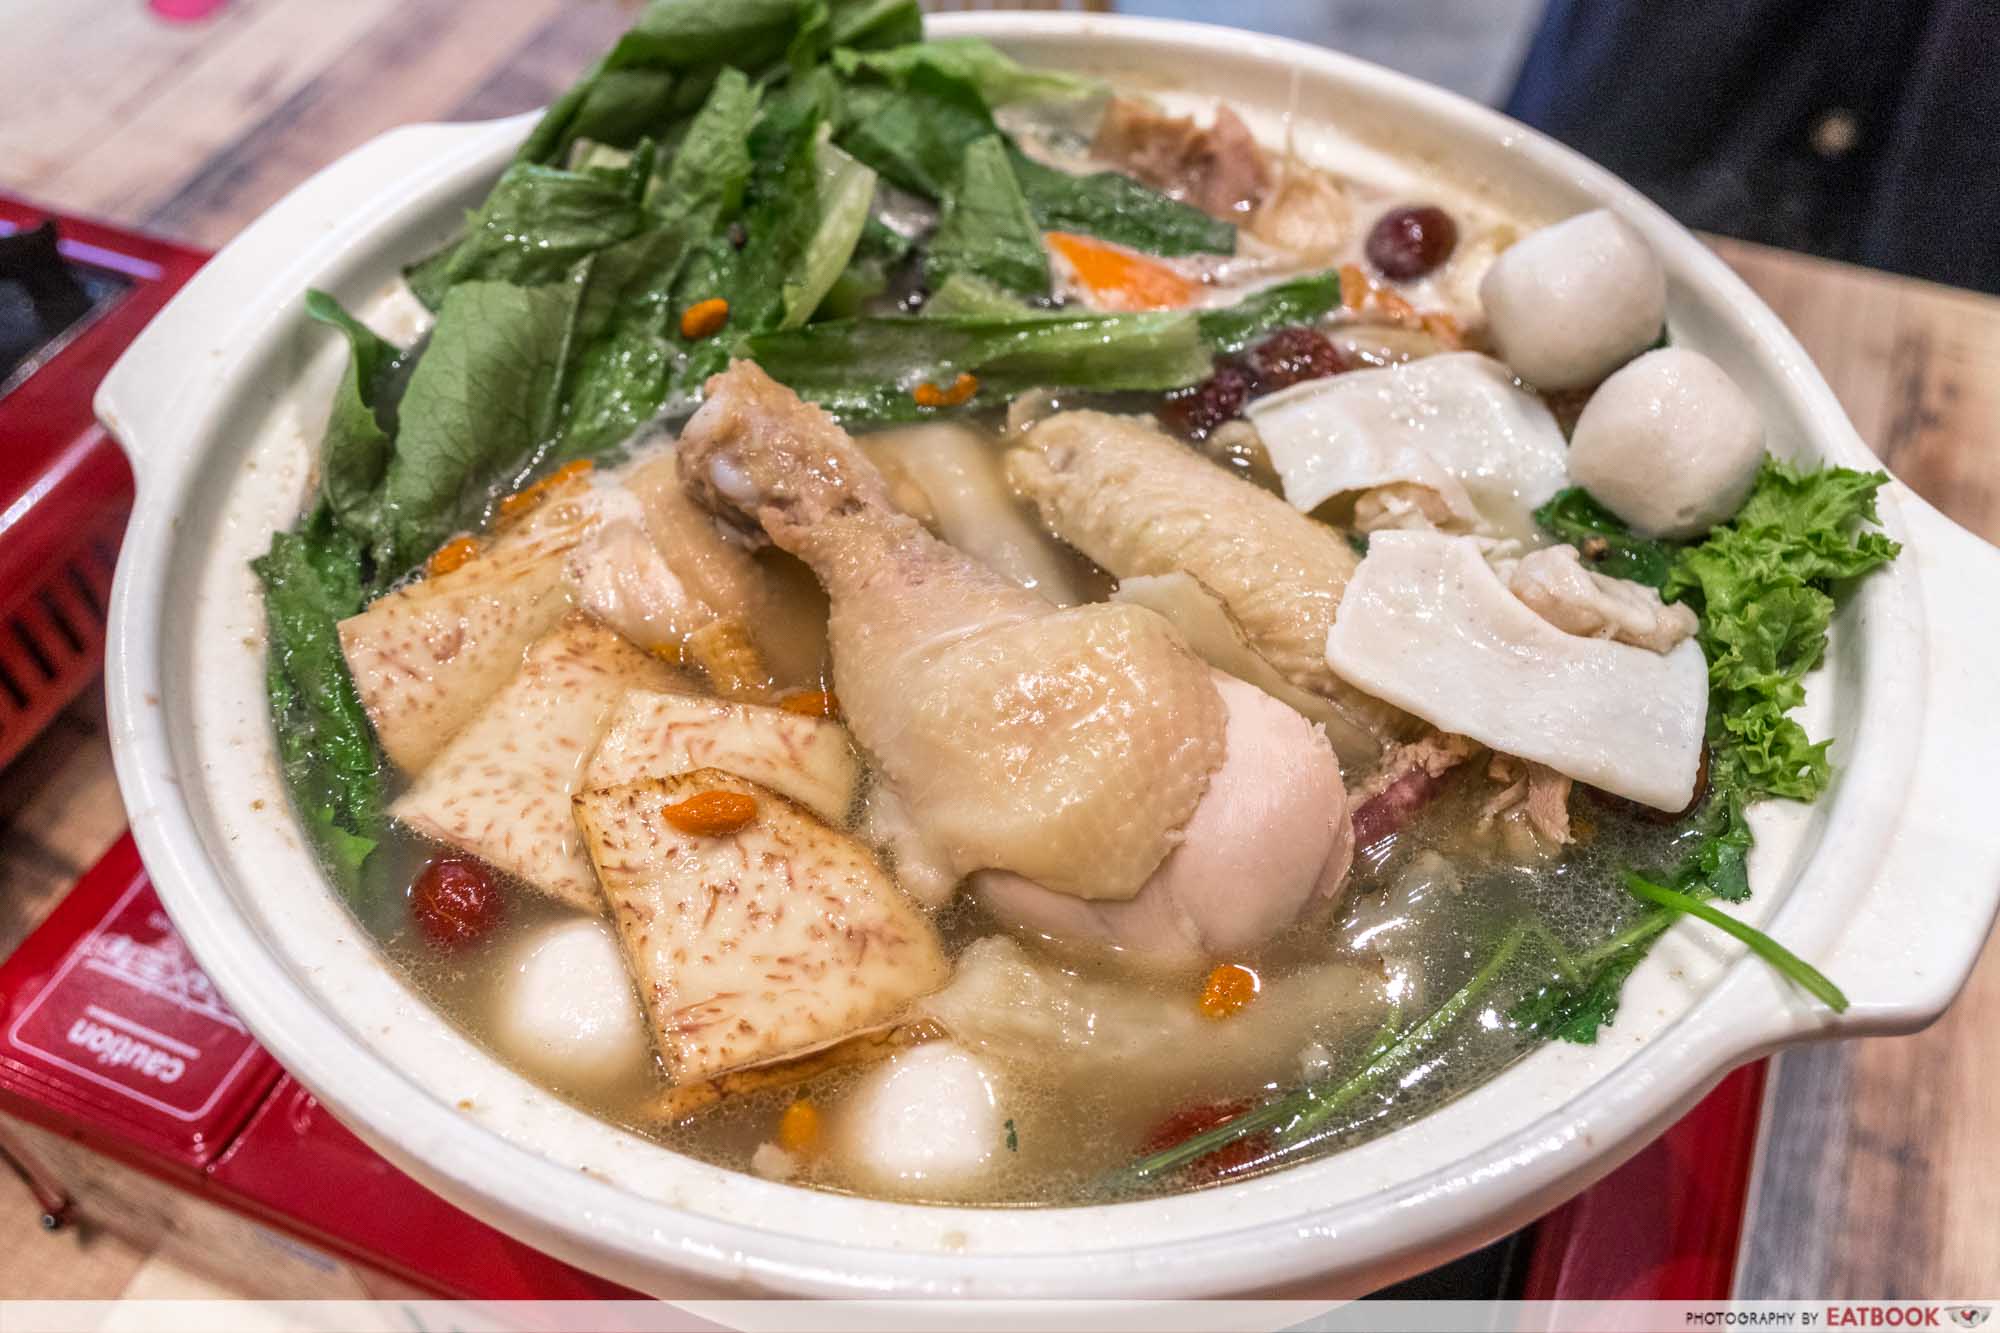 Fatbird - Chicken Stew in Pig's Stomach With Extra Ingredients